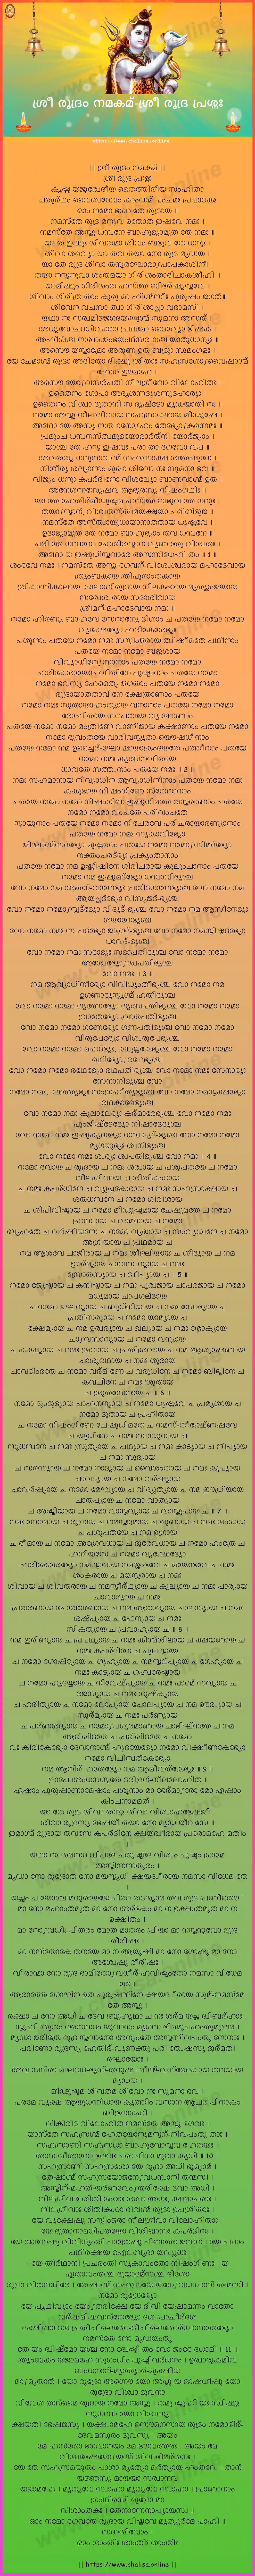 sri-rudra-prasnah-sri-rudram-namakam-malayalam-malayalam-lyrics-download